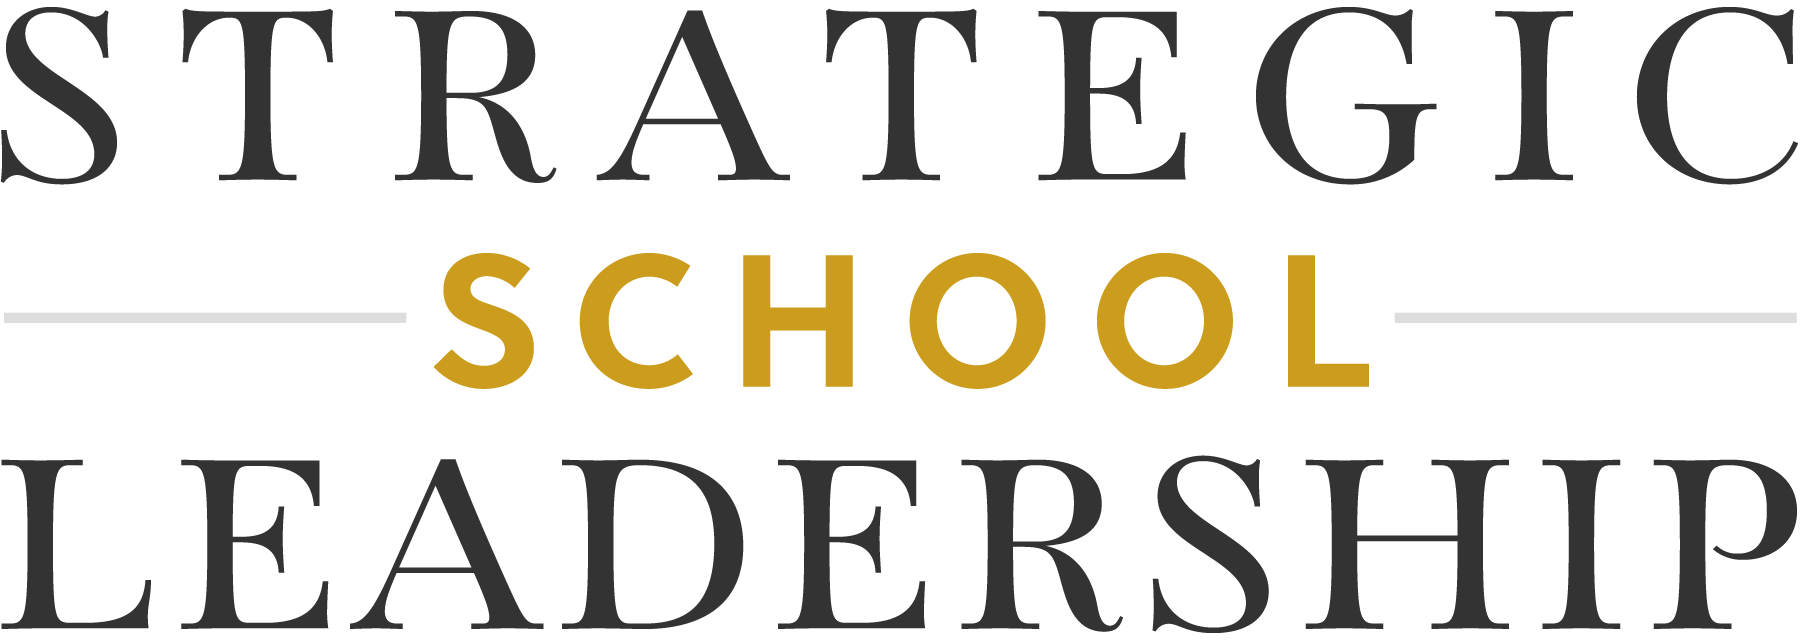 Strategic school leadership logo